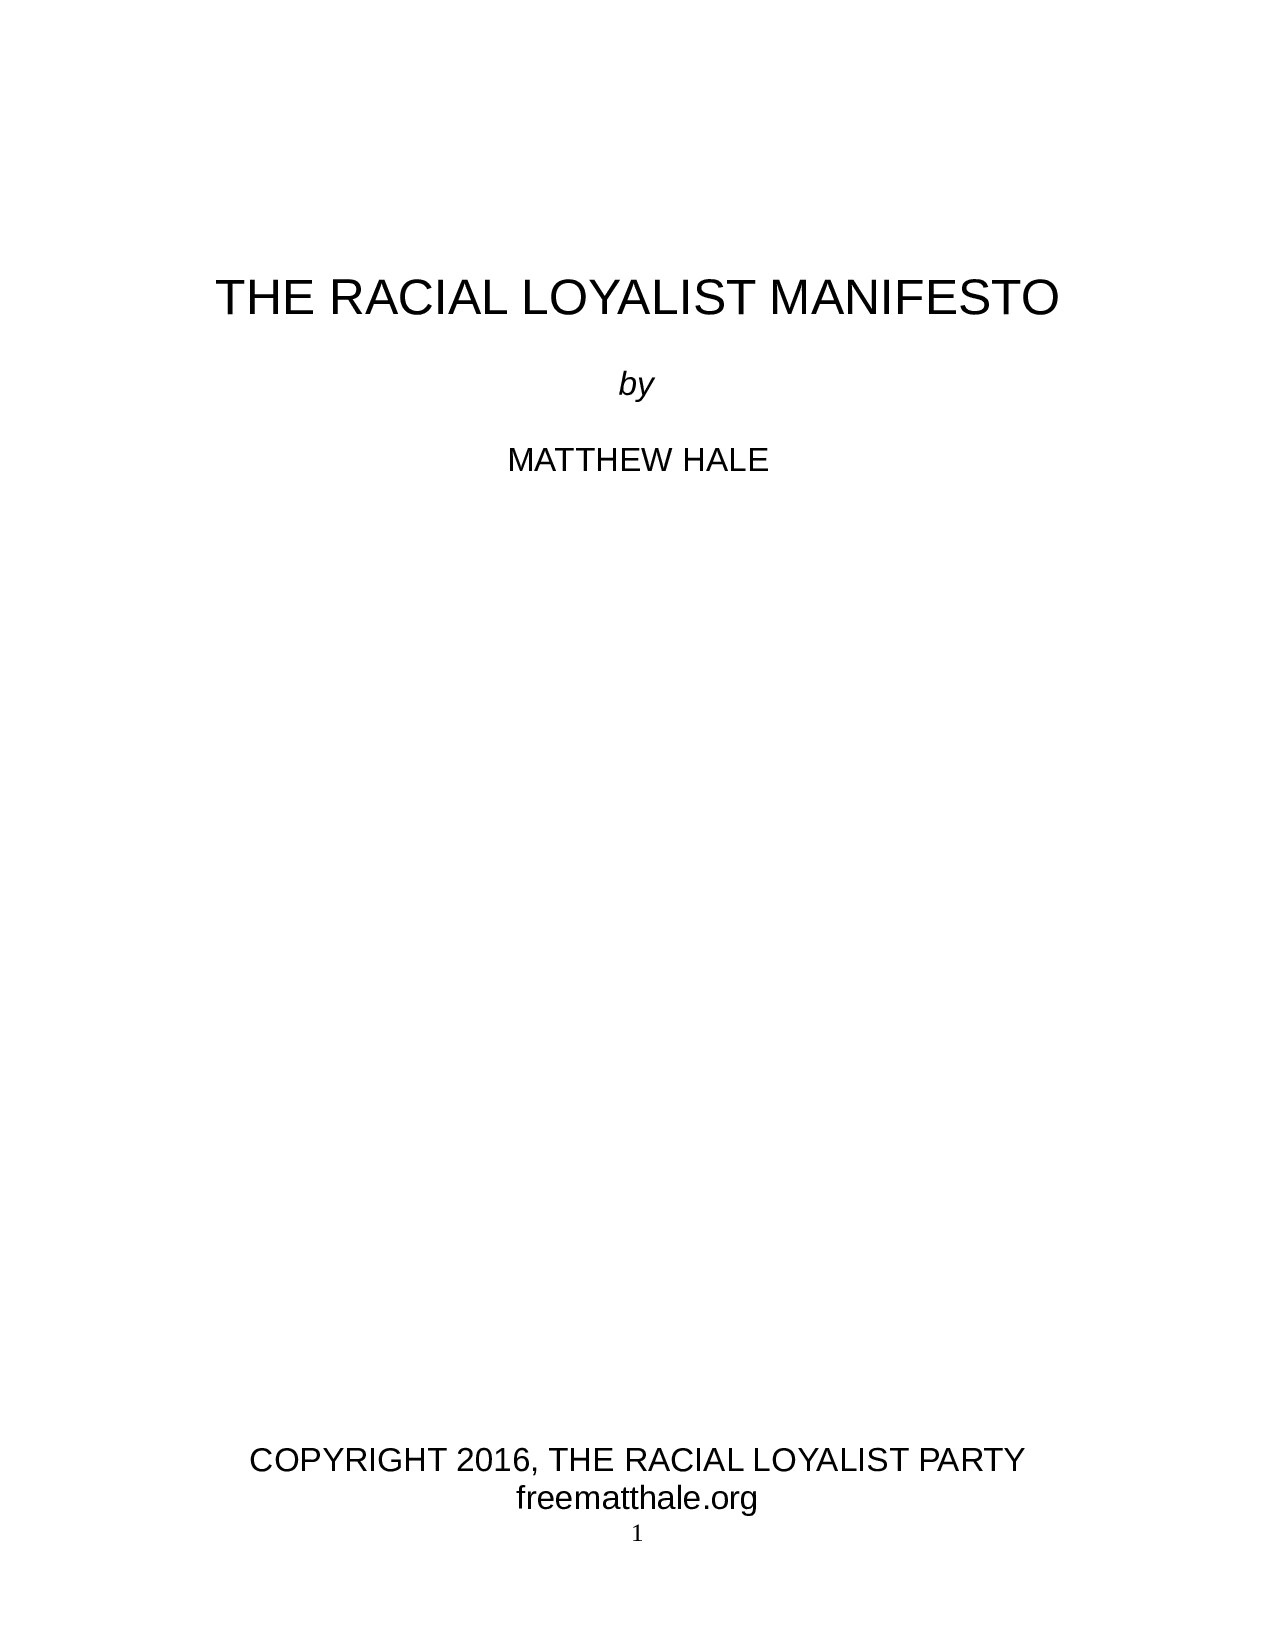 Racial Loyalist Manifesto, by Matthew Hale